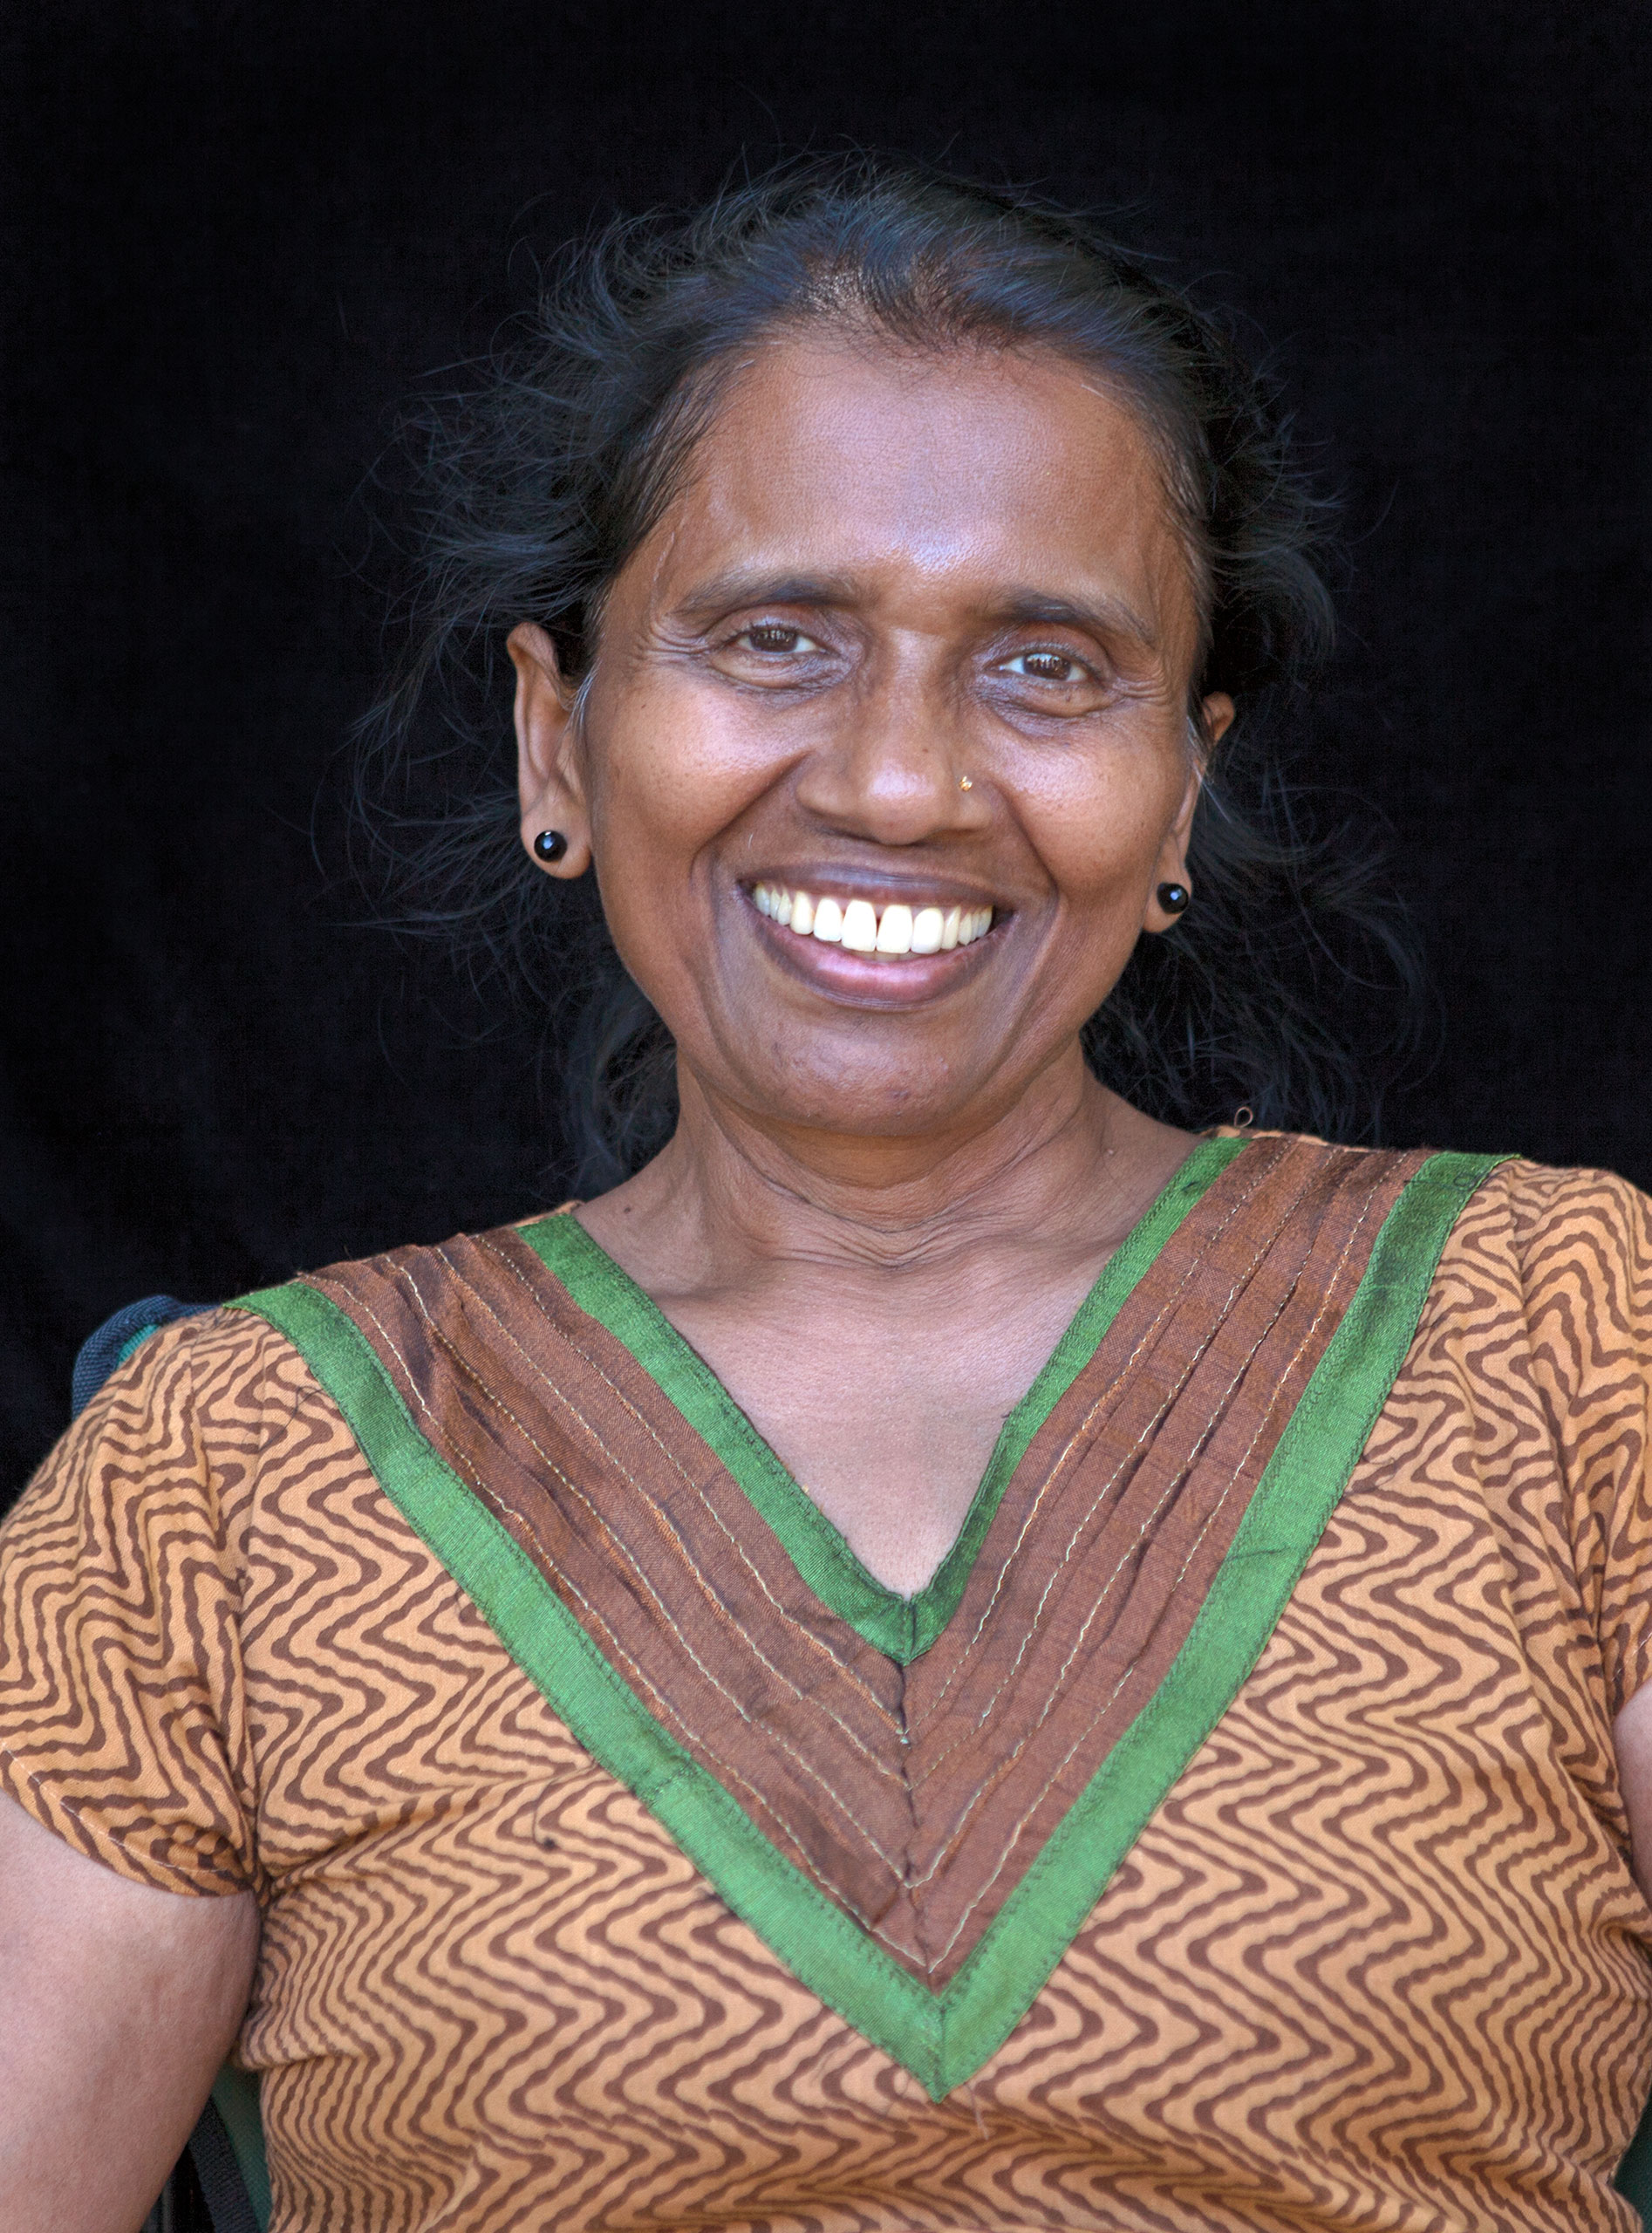 Vathsala from Sri Lanka